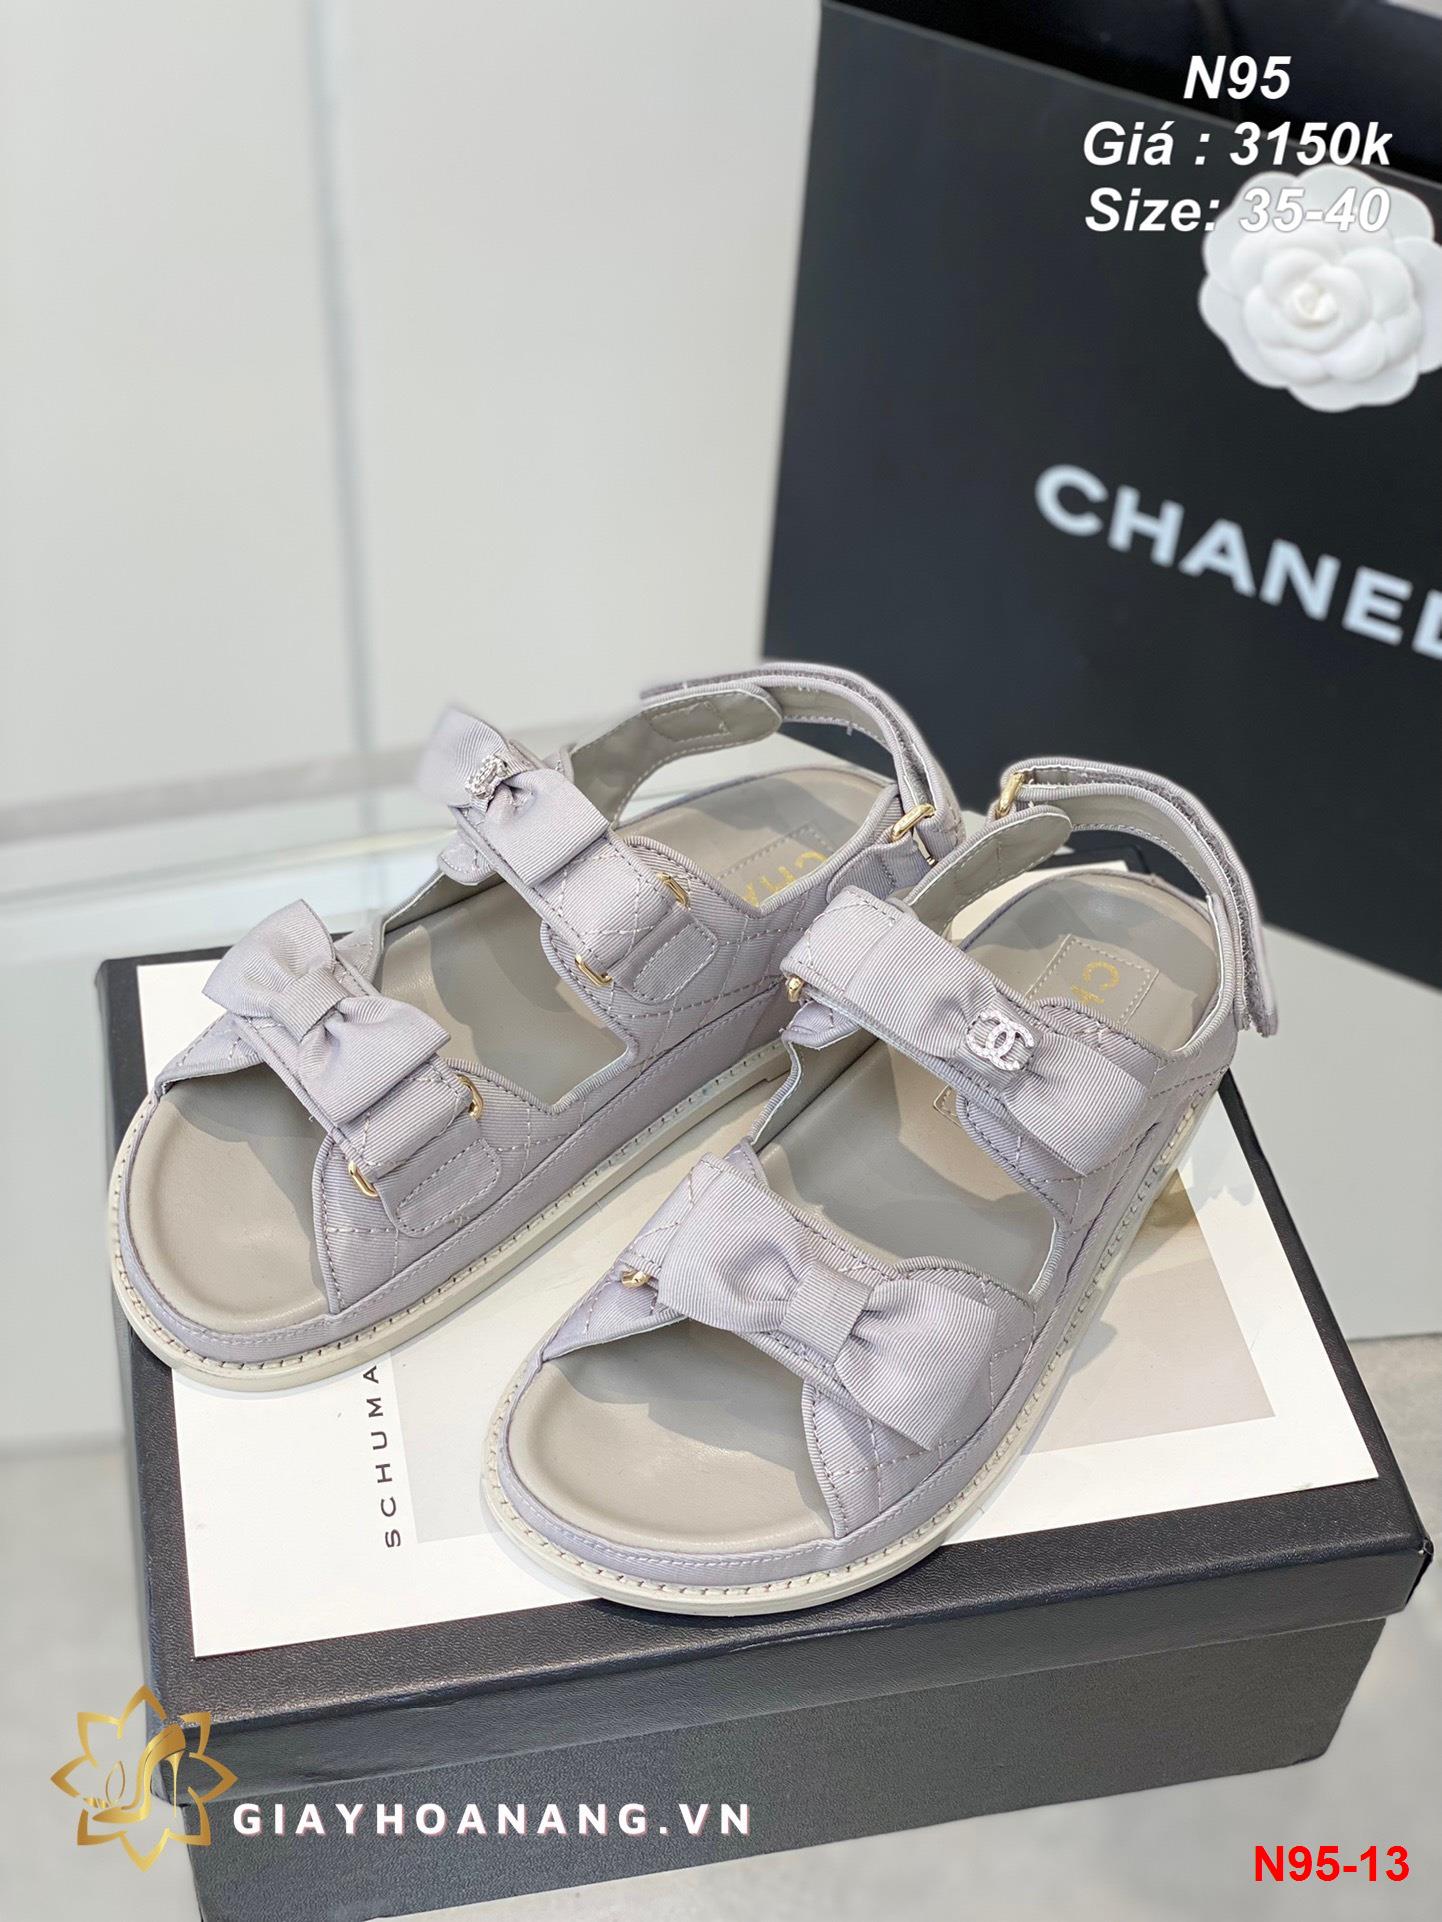 N95-13 Chanel sandal siêu cấp